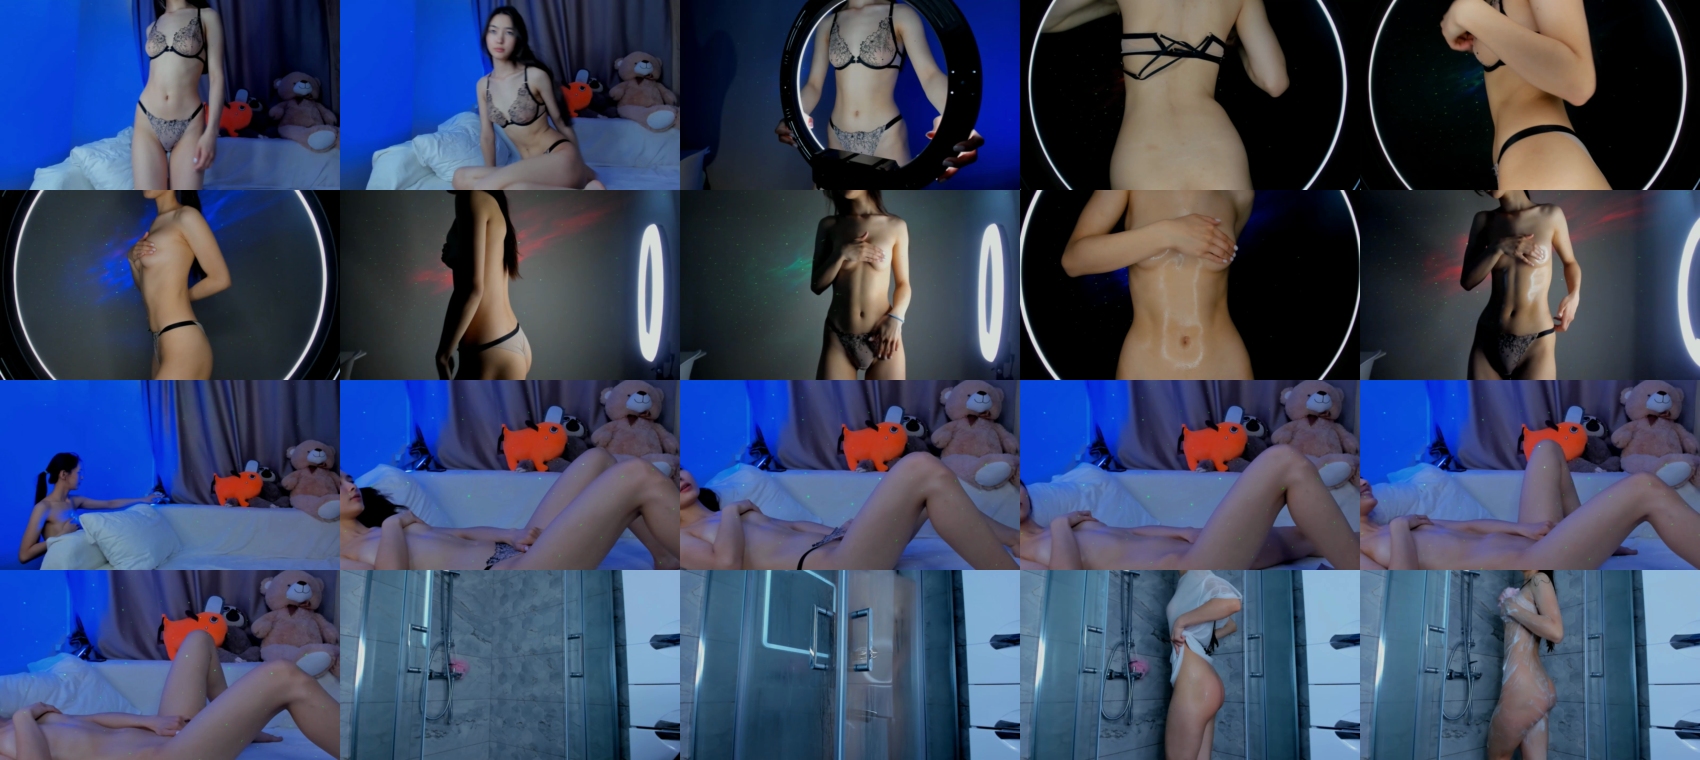 free tube, sex videos, neferpita hard porn, neferpita sex clips, watch nefe...